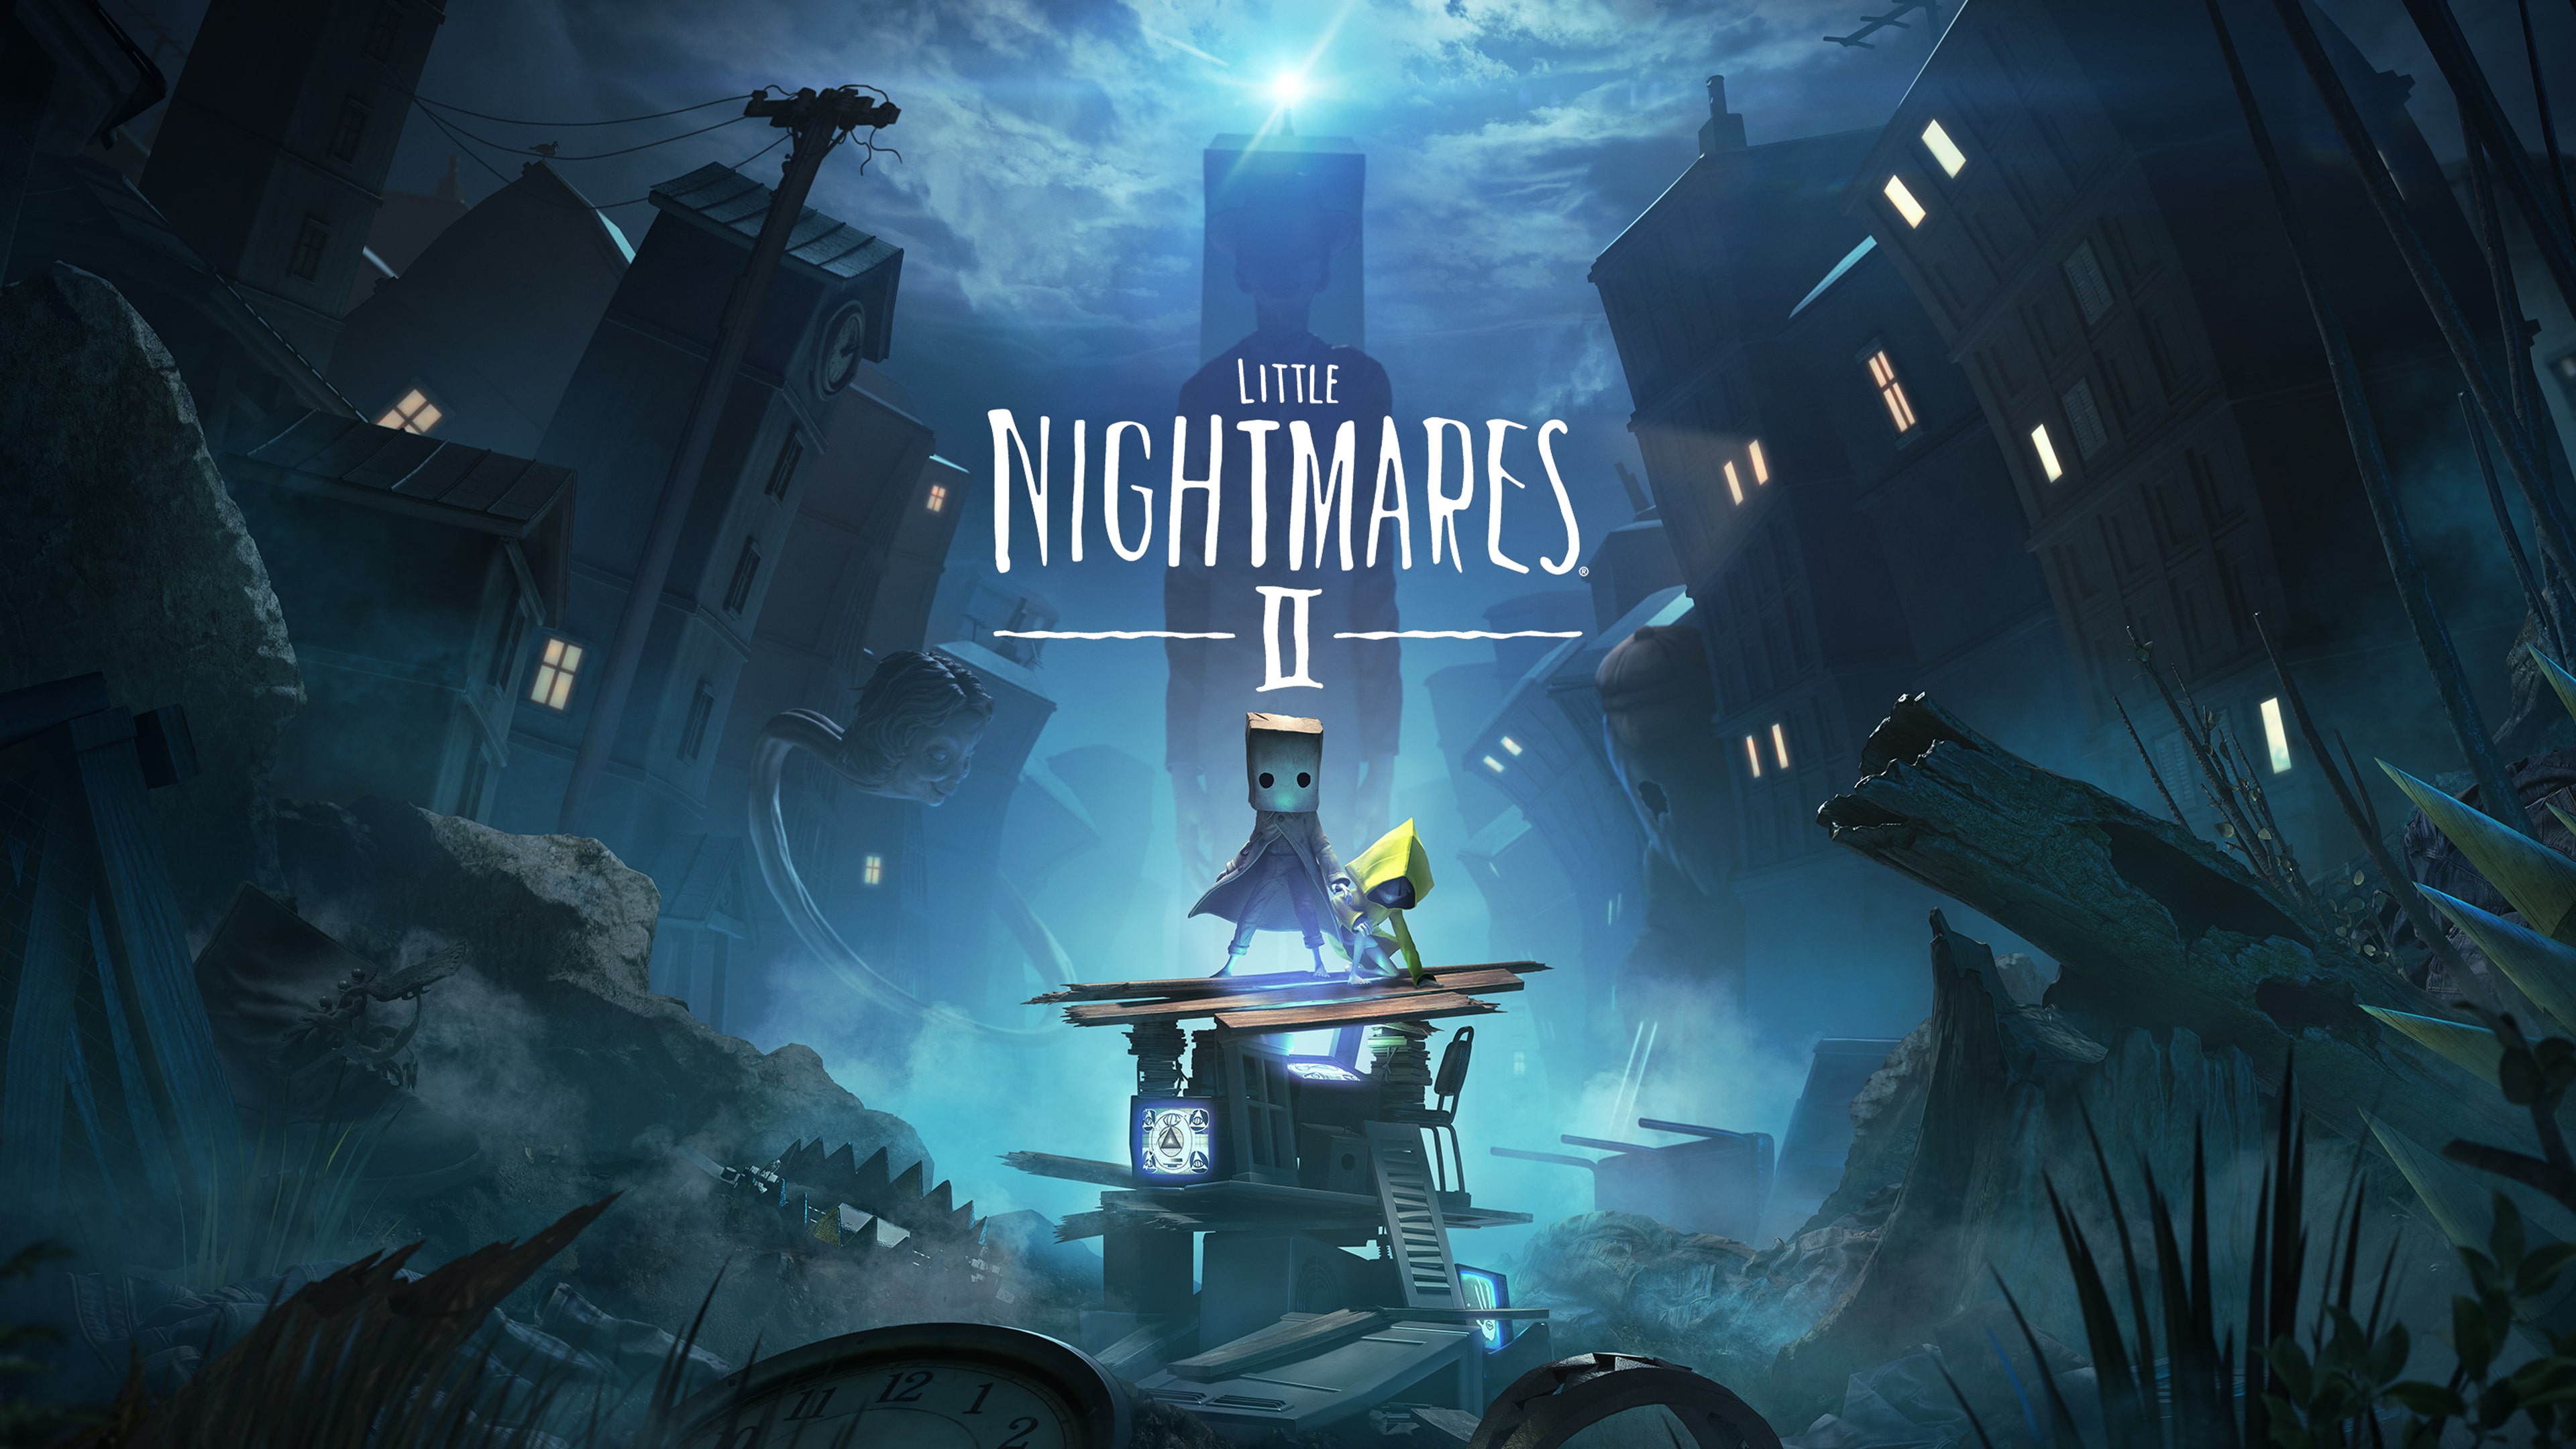 Little Nightmares II - PS4 - ecay